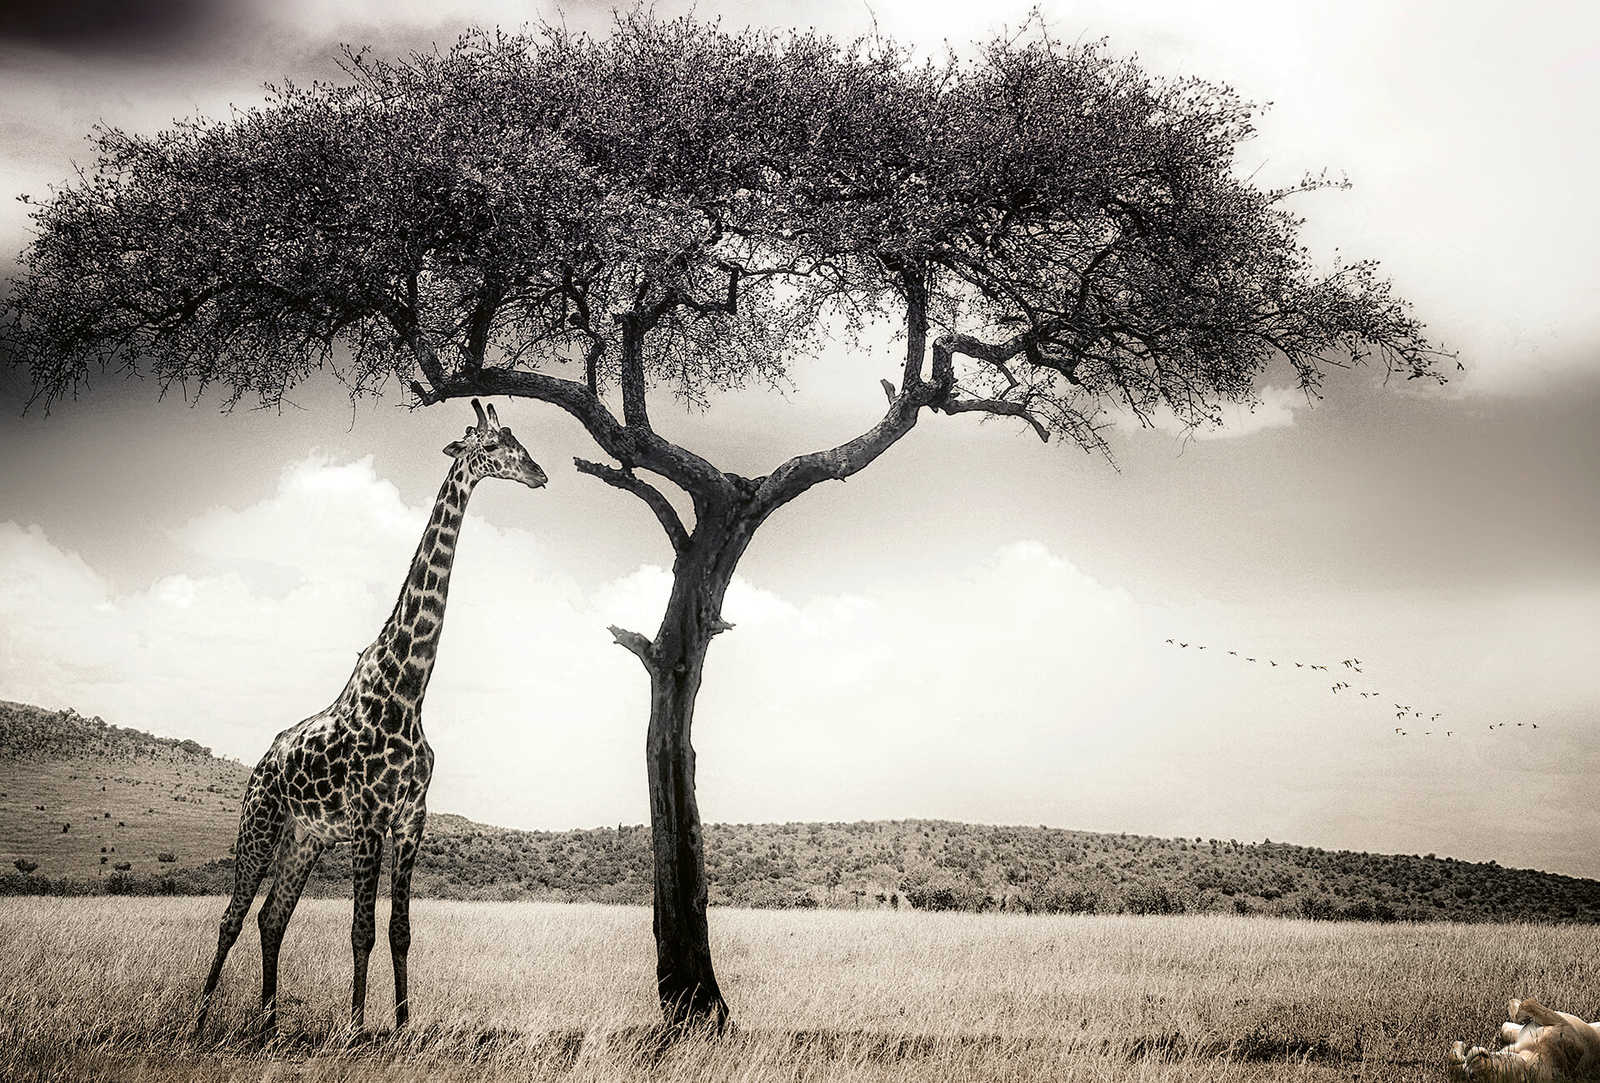         Fototapete Safari Tier Giraffe – Grau, Weiß, Schwarz
    